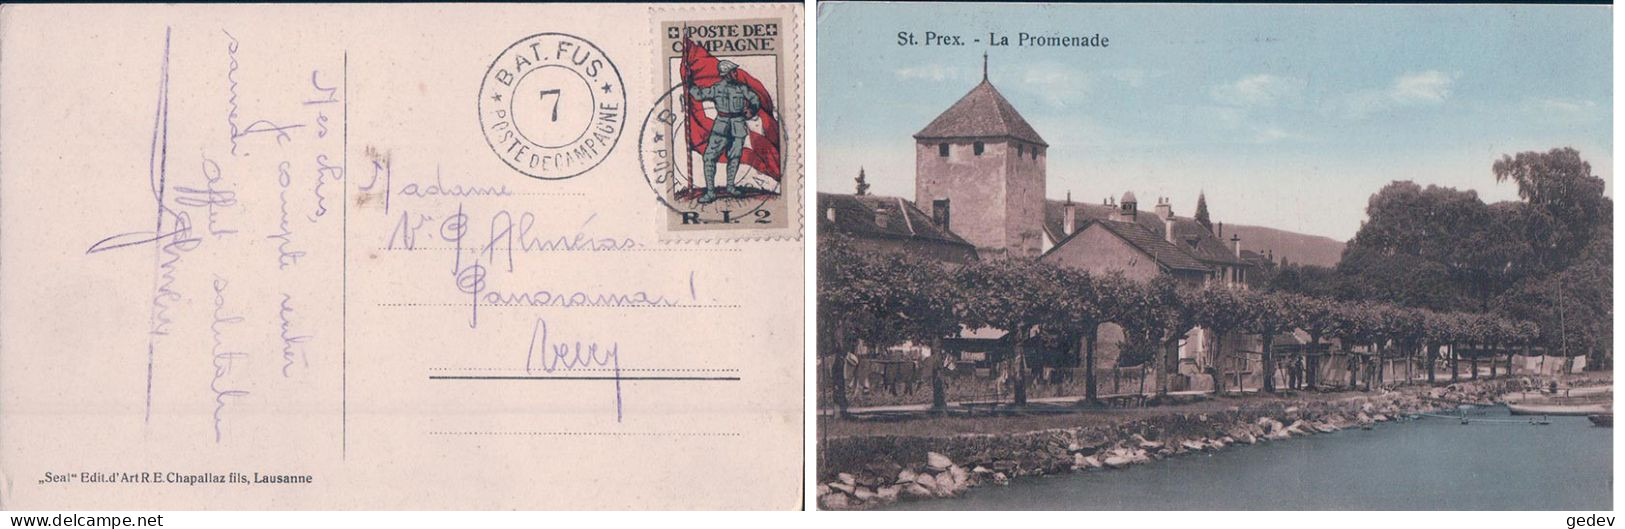 St Prex VD, La Promenade + Timbre Militaire Poste De Campagne (7) - Saint-Prex